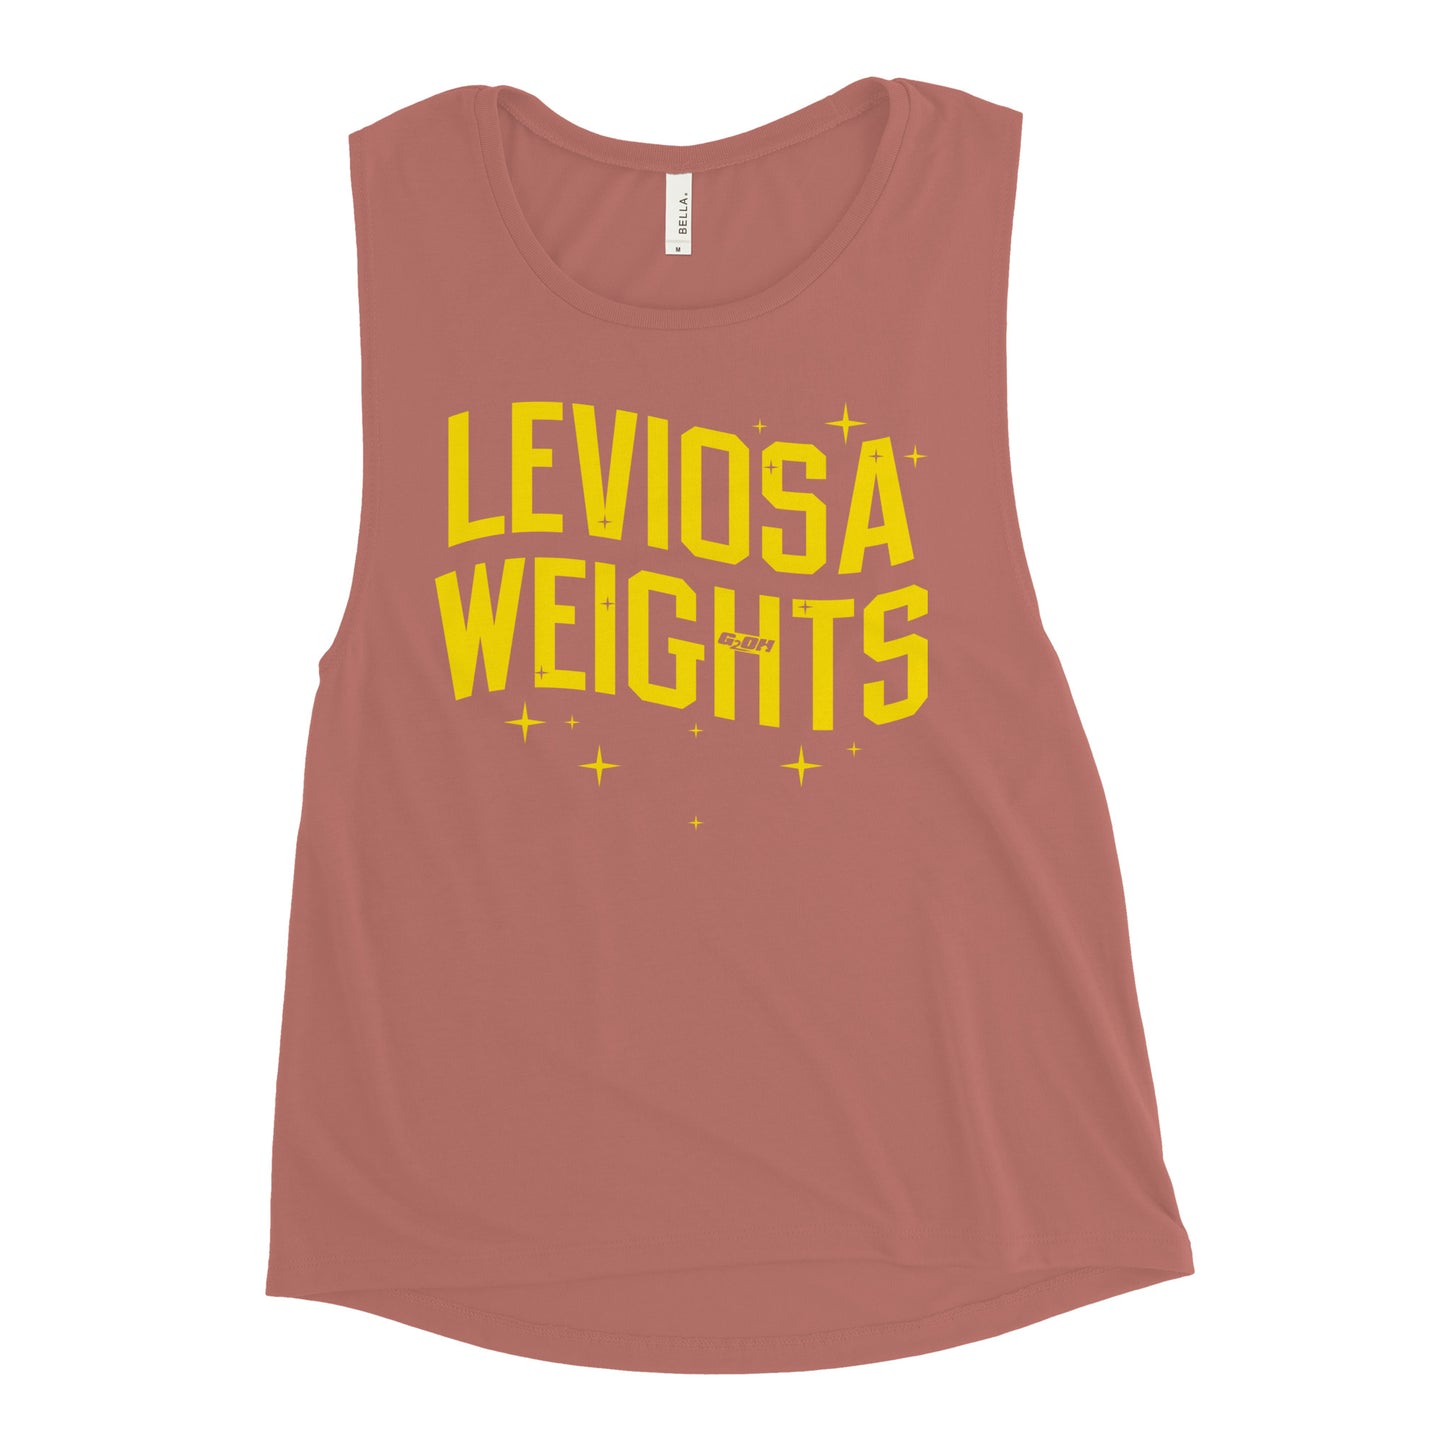 Leviosa Weights Women's Muscle Tank